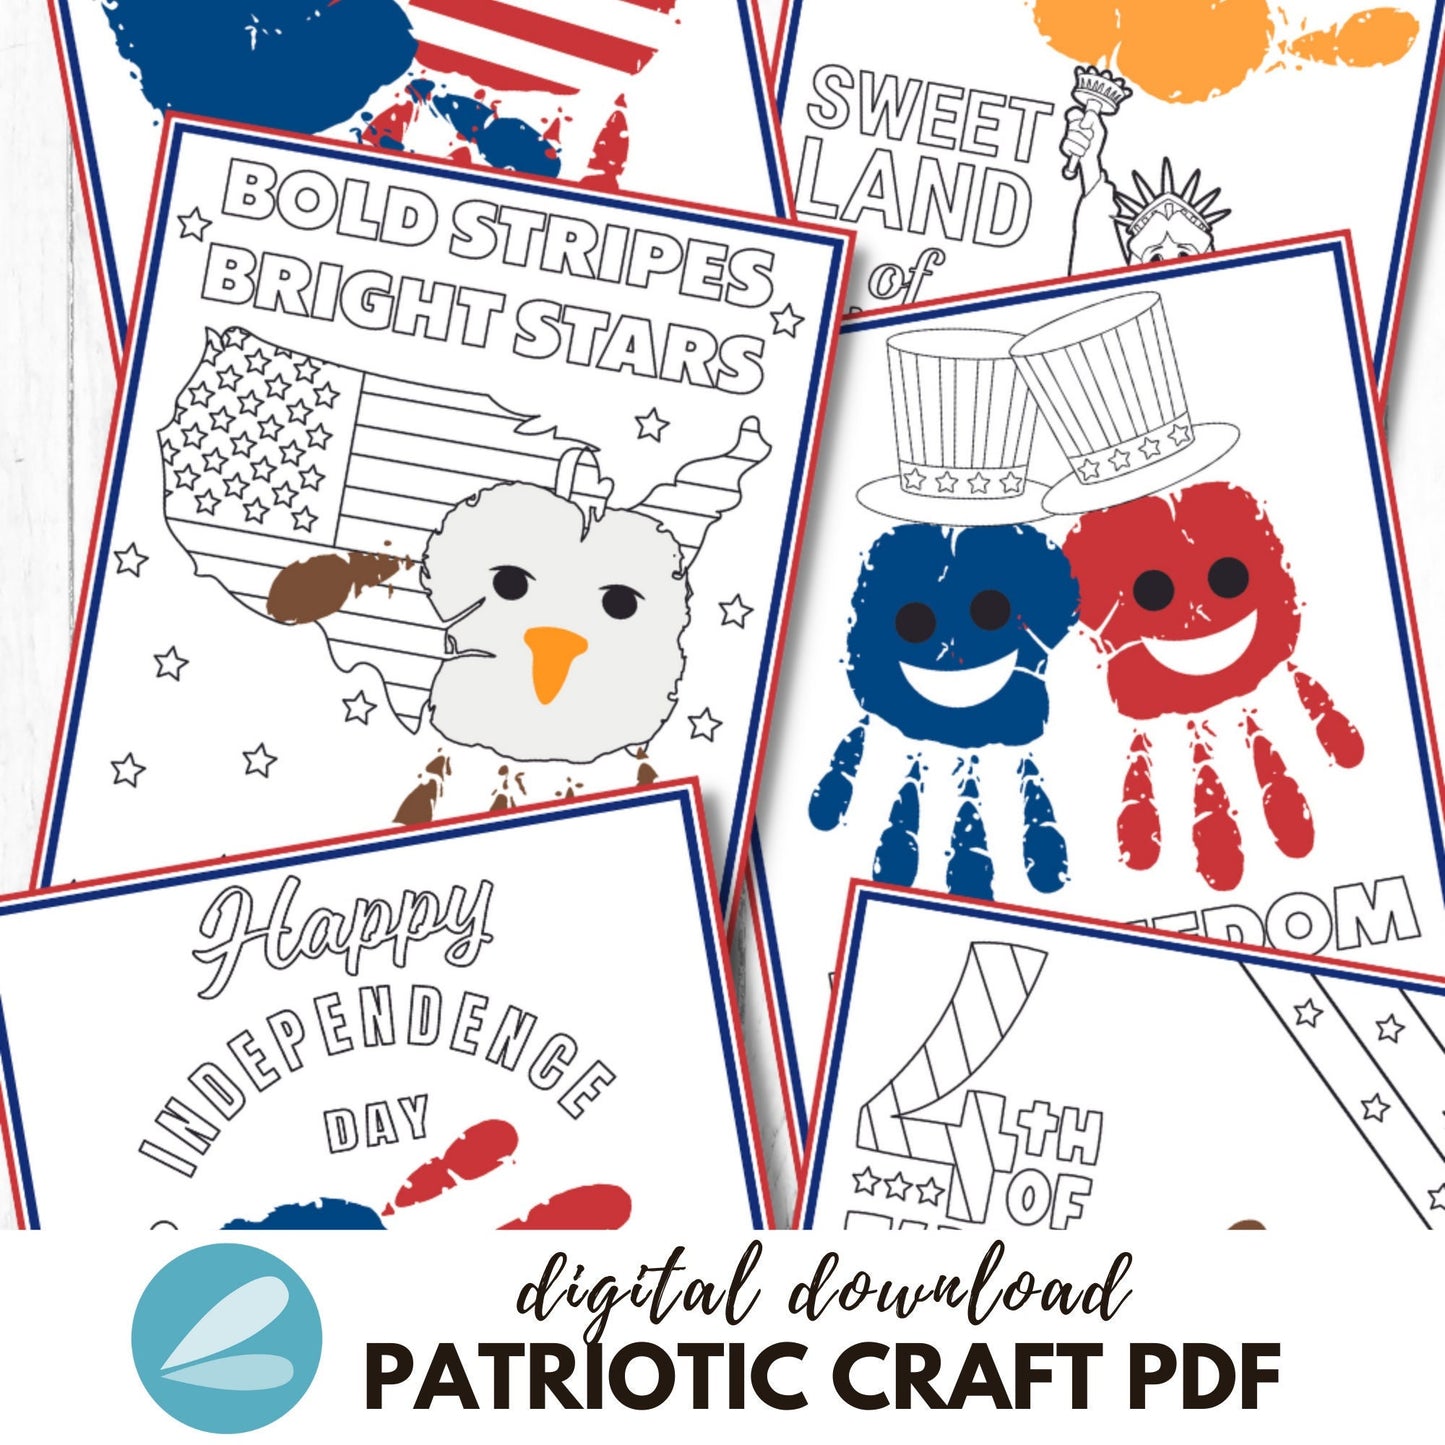 Patriotic Printable Handprint Art Templates - Patriotic Handprint ART PDF - Instant Download